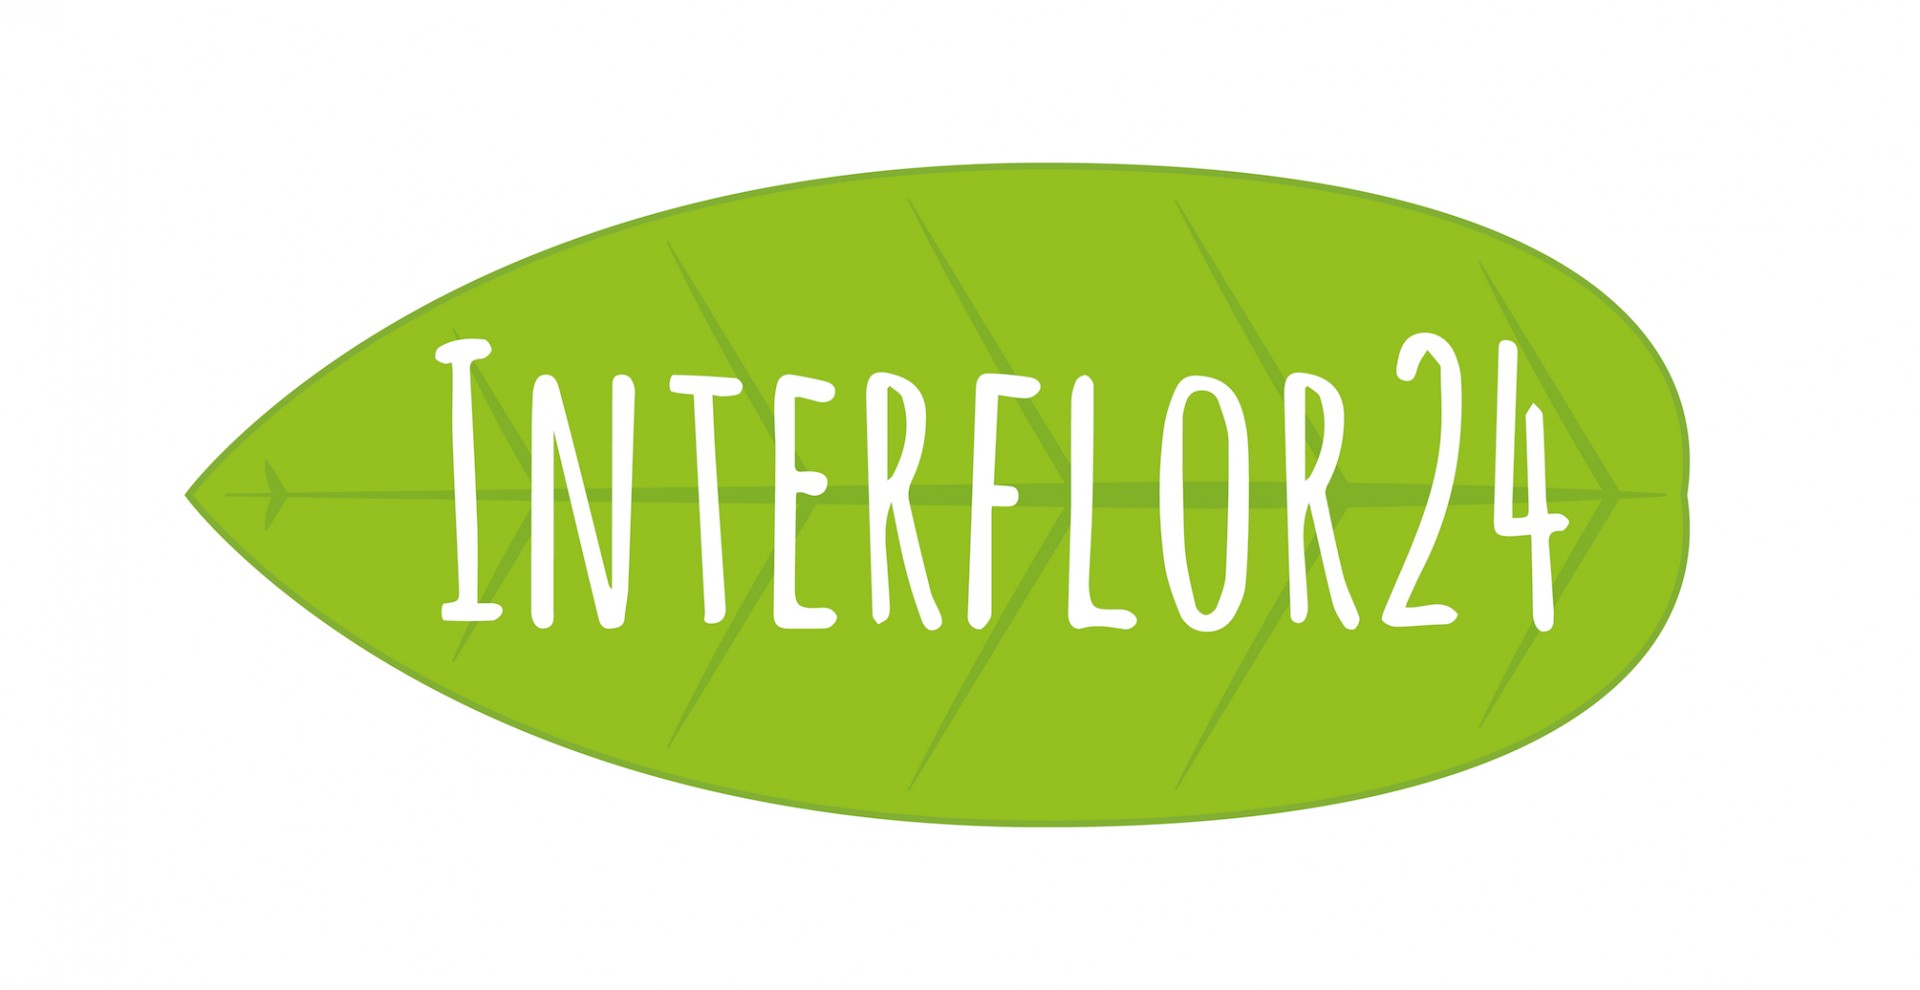 Art and design by Jonas Horbach Interflor 24 Logo